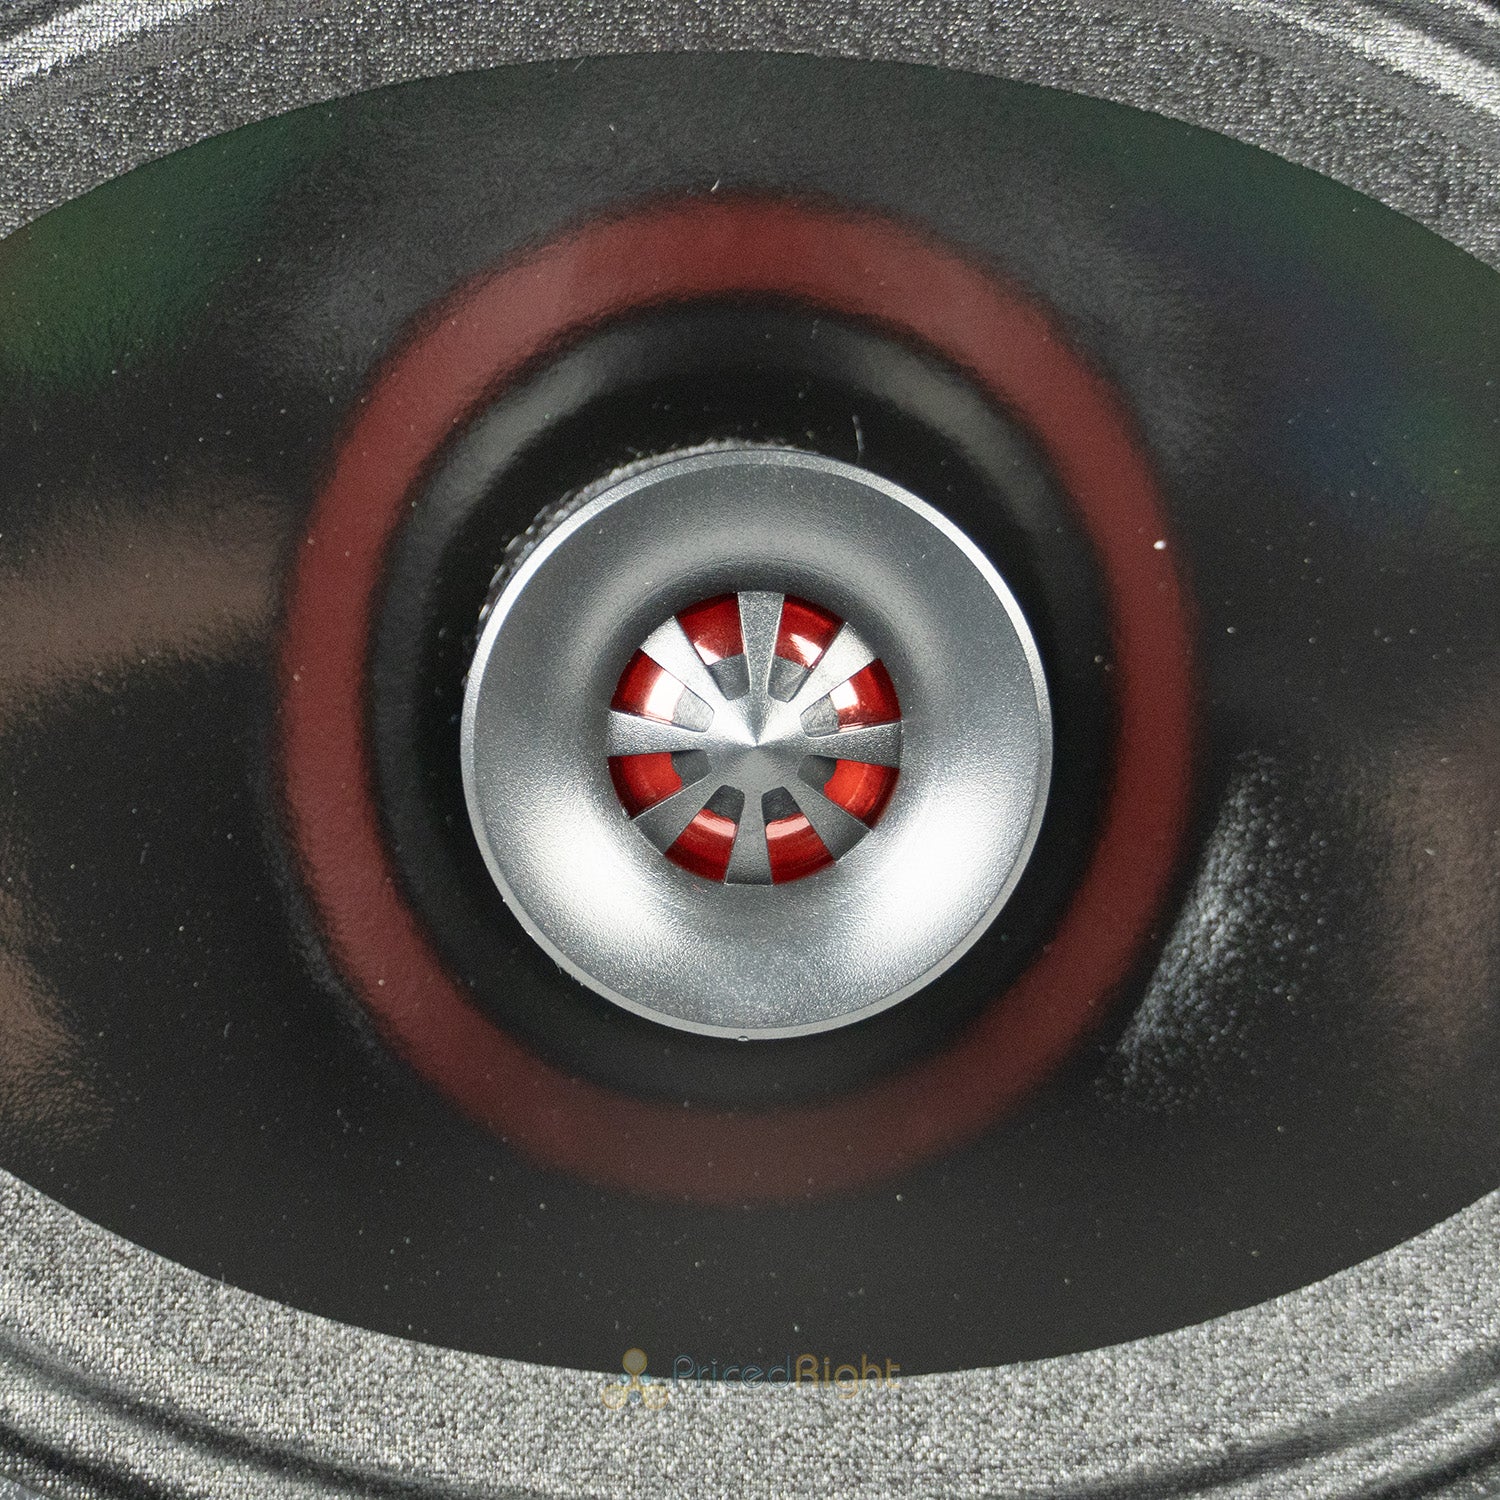 OKUR 5 x 7" 2-Way Coaxial Speakers 350 Watts Max Power 1" KSV 4 Ohm OS57 Pair